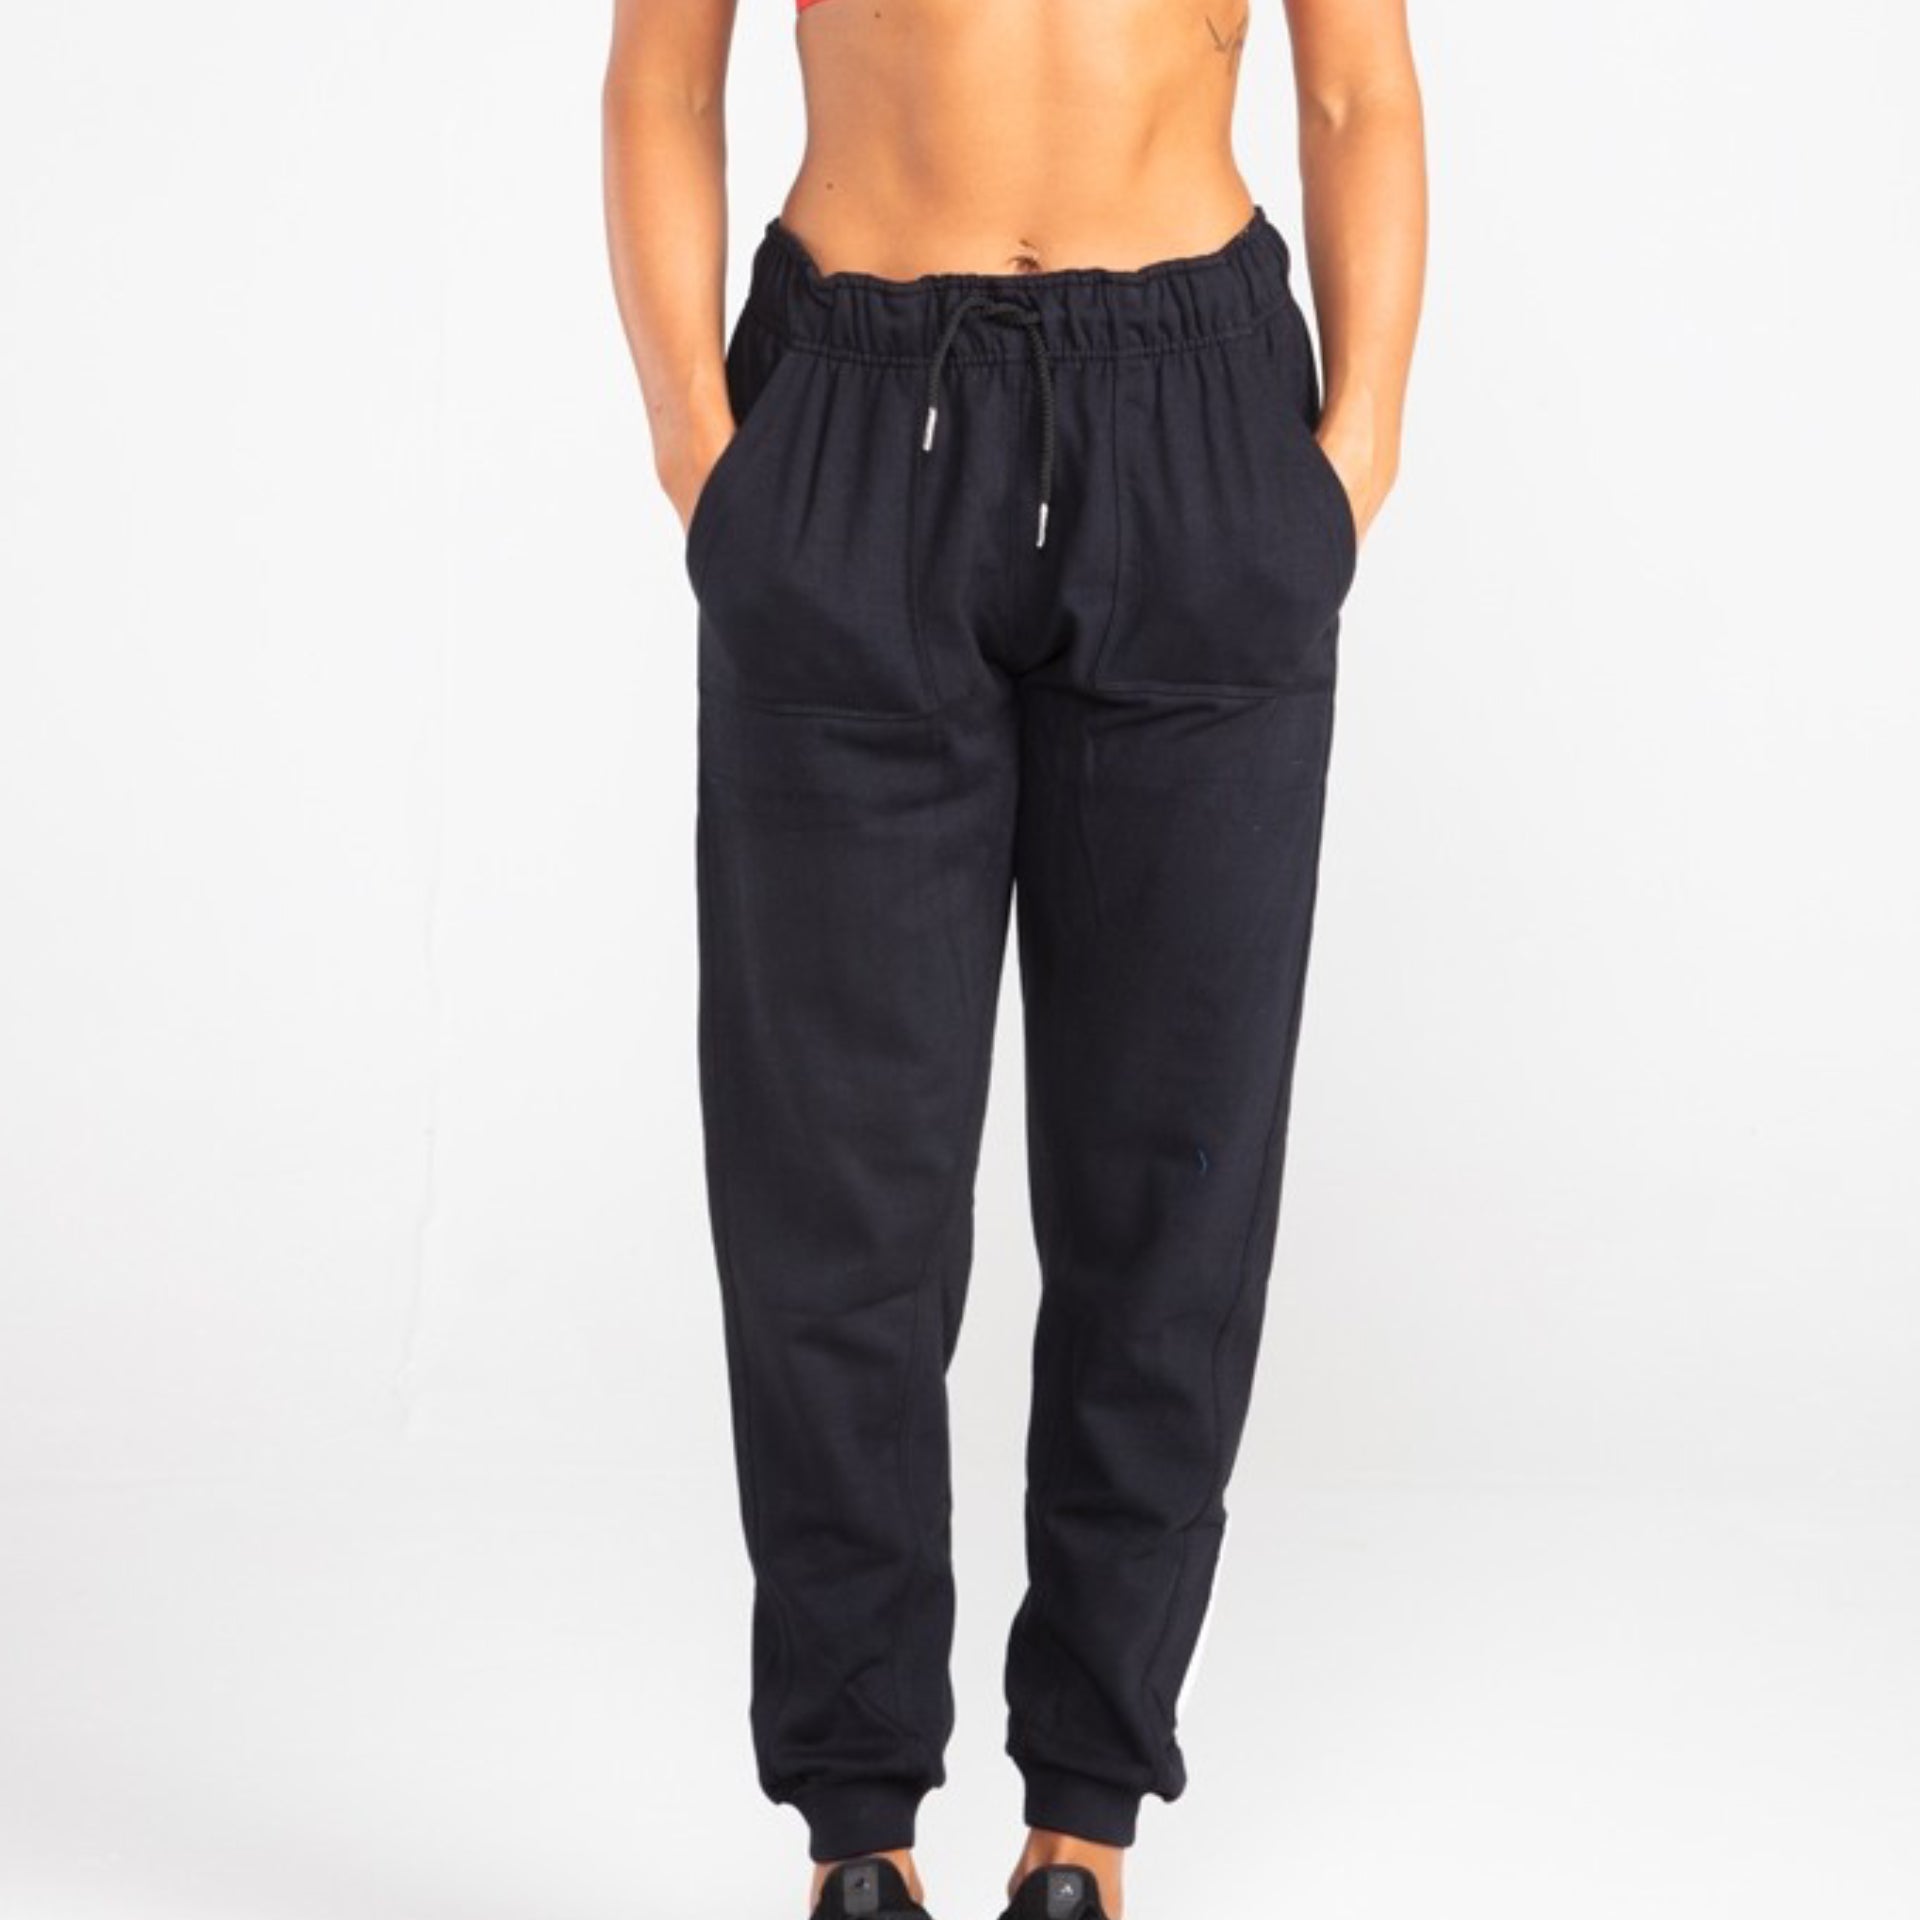 Adidas Women's Climacool Track Pants, Black/Wild Pink, Size M | eBay